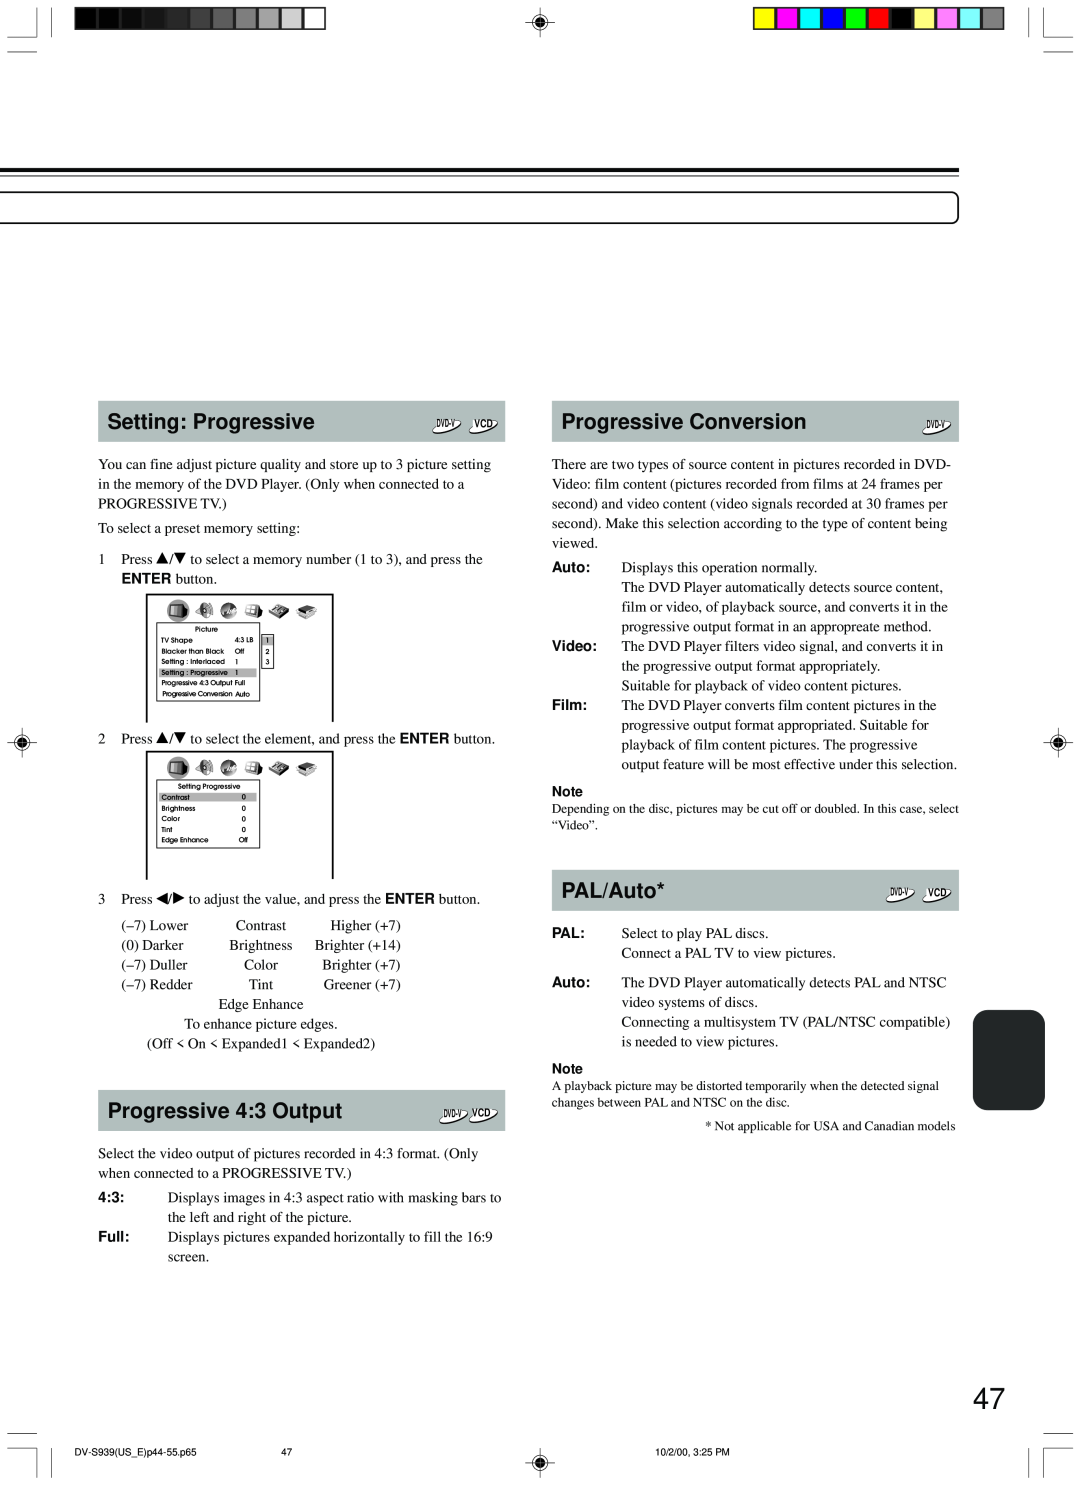 Onkyo DV-S939 instruction manual Setting Progressive, Progressive 43 Output, Progressive Conversion, PAL/Auto 